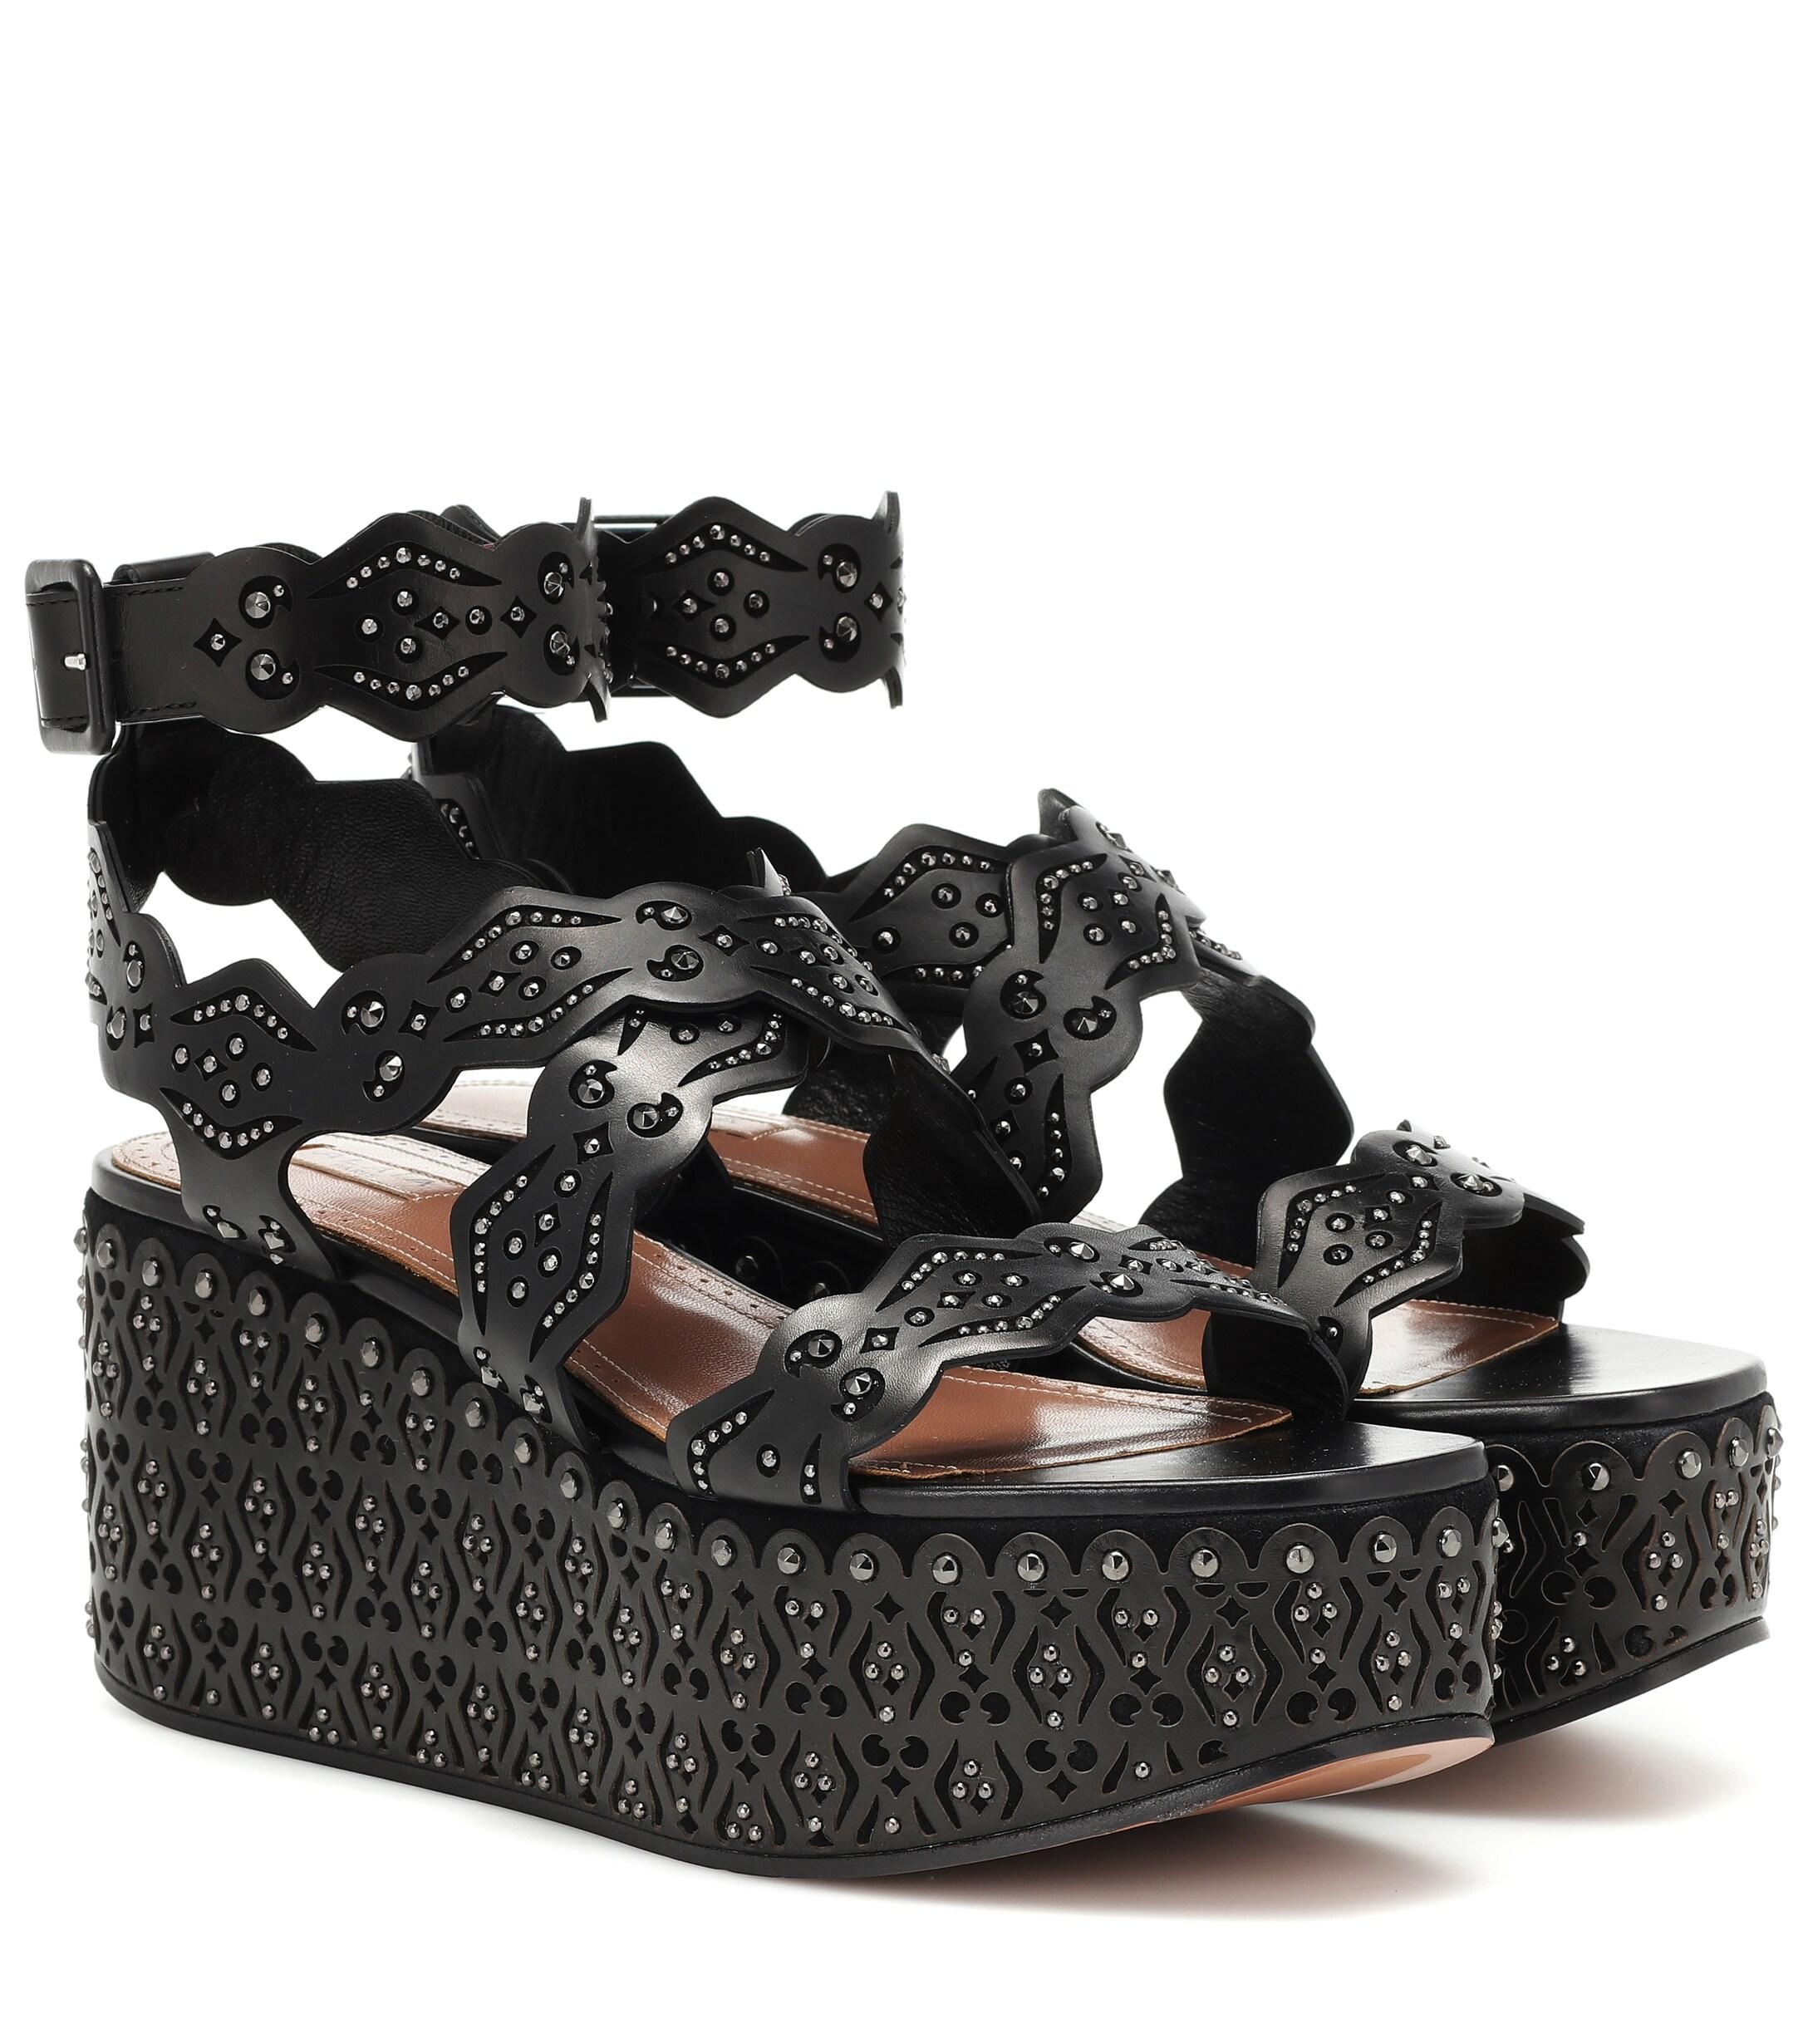 Alaïa Studded Leather Plateau Sandals in Black - Lyst